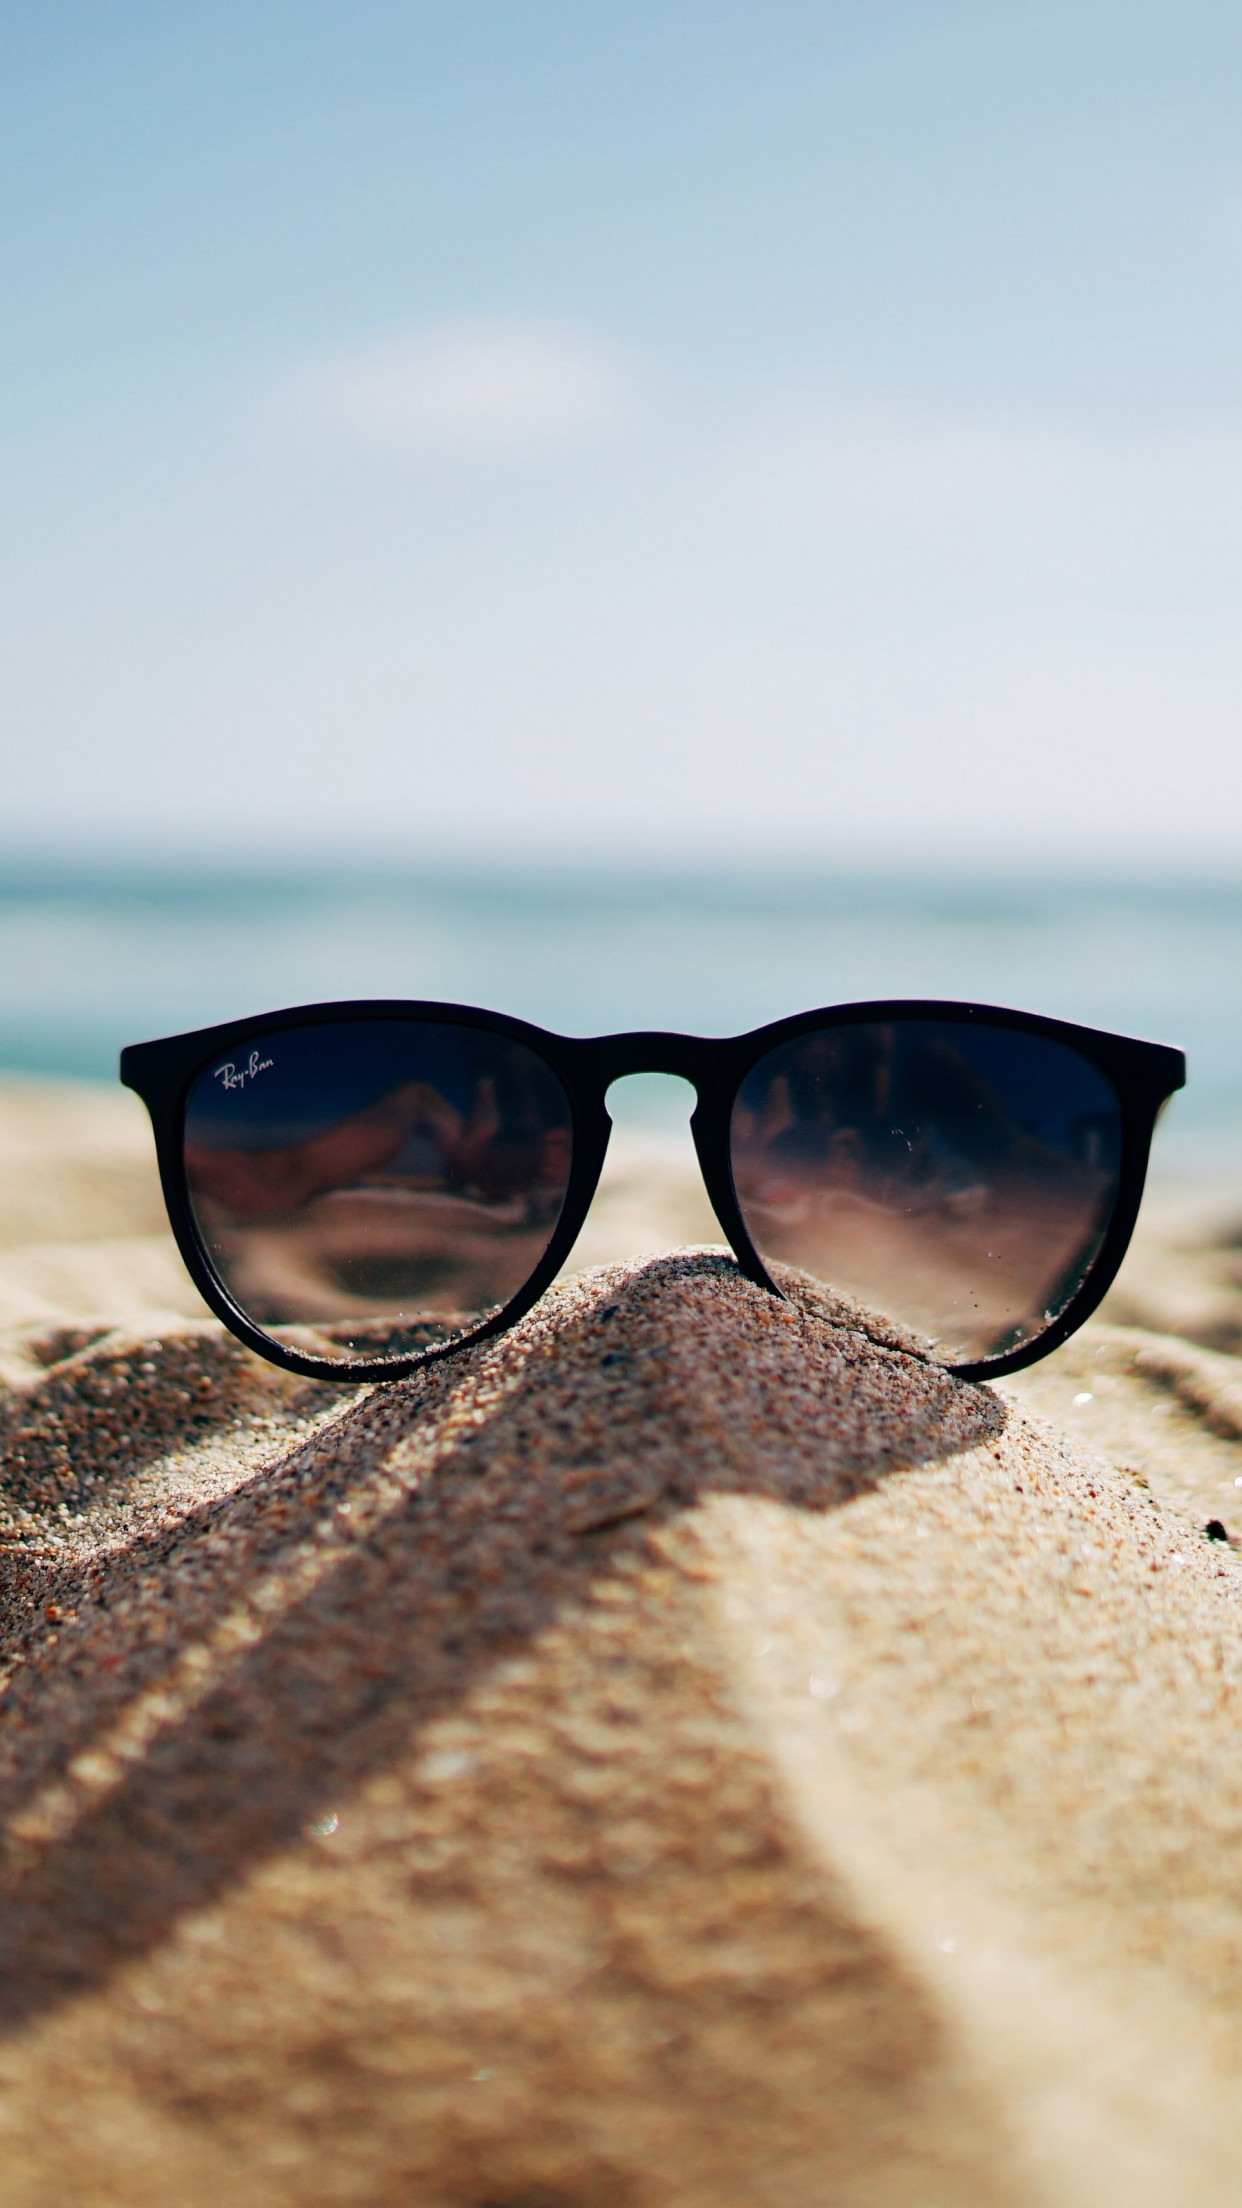 Ray Ban sunglasses on hot sand beach wallpaper 1242x2208